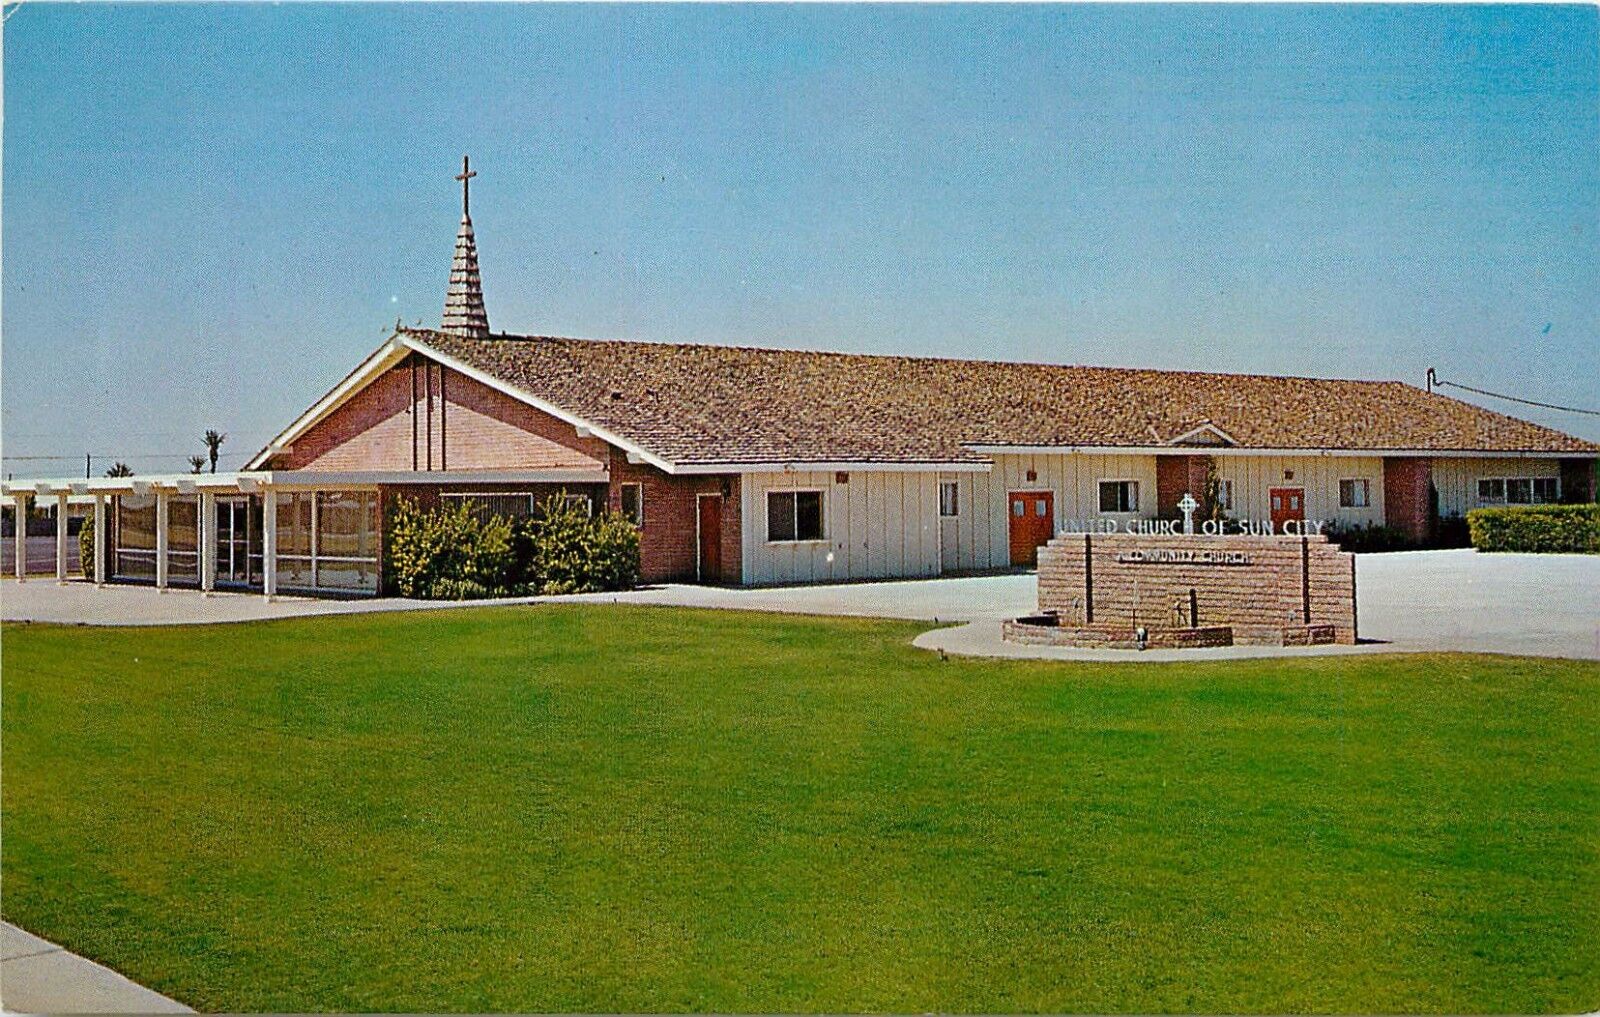 United Church of Sun City Arizona Fellowship Hall Postcard